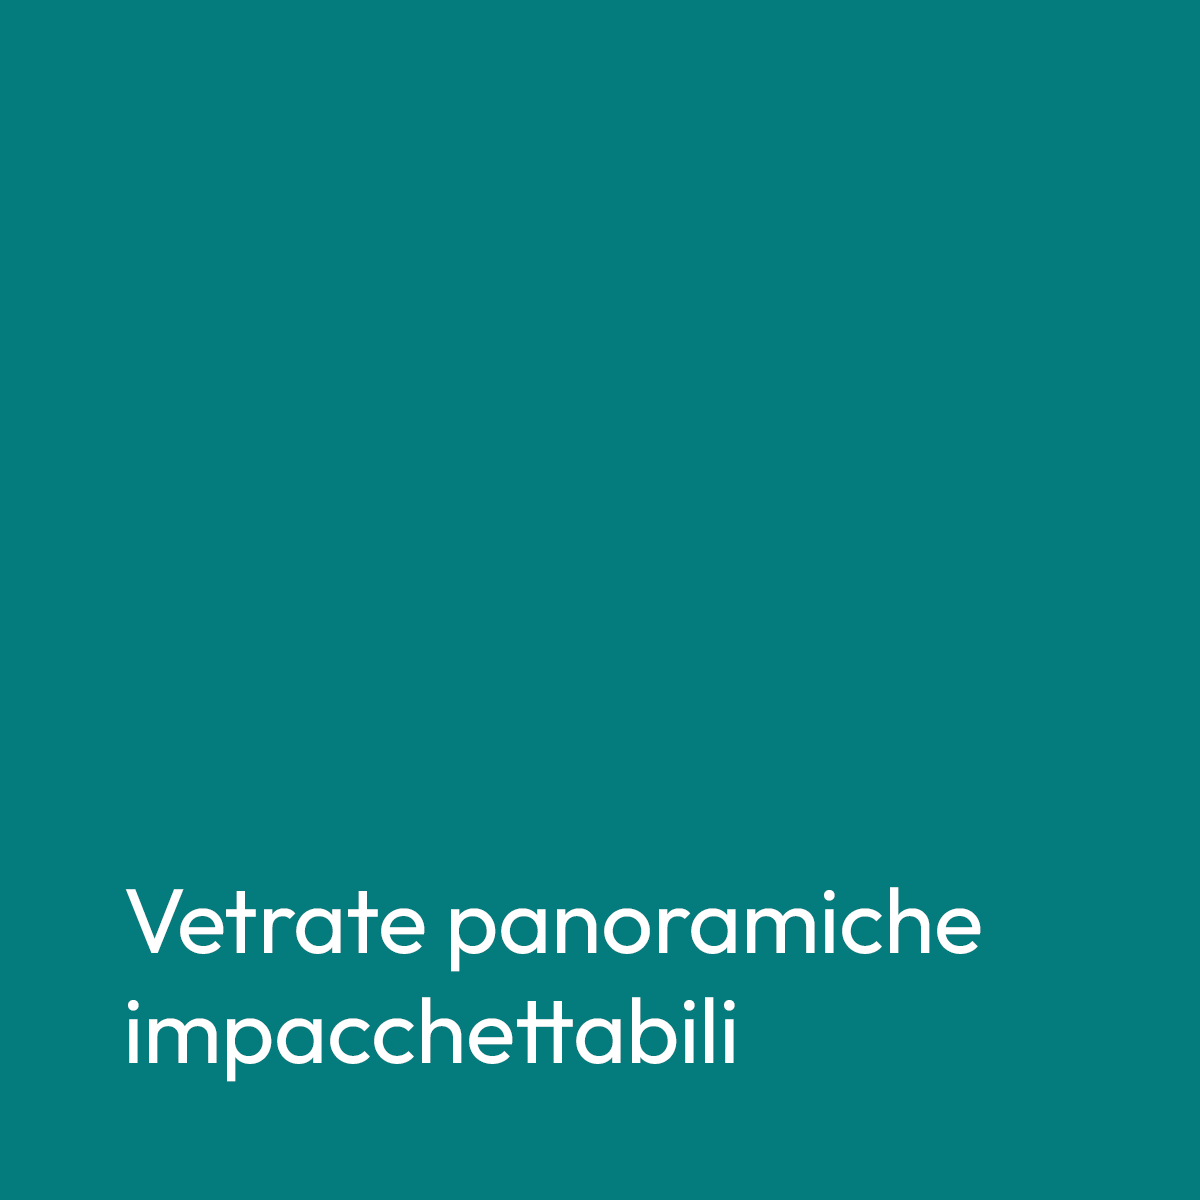 banner-title-vetrateimpacc